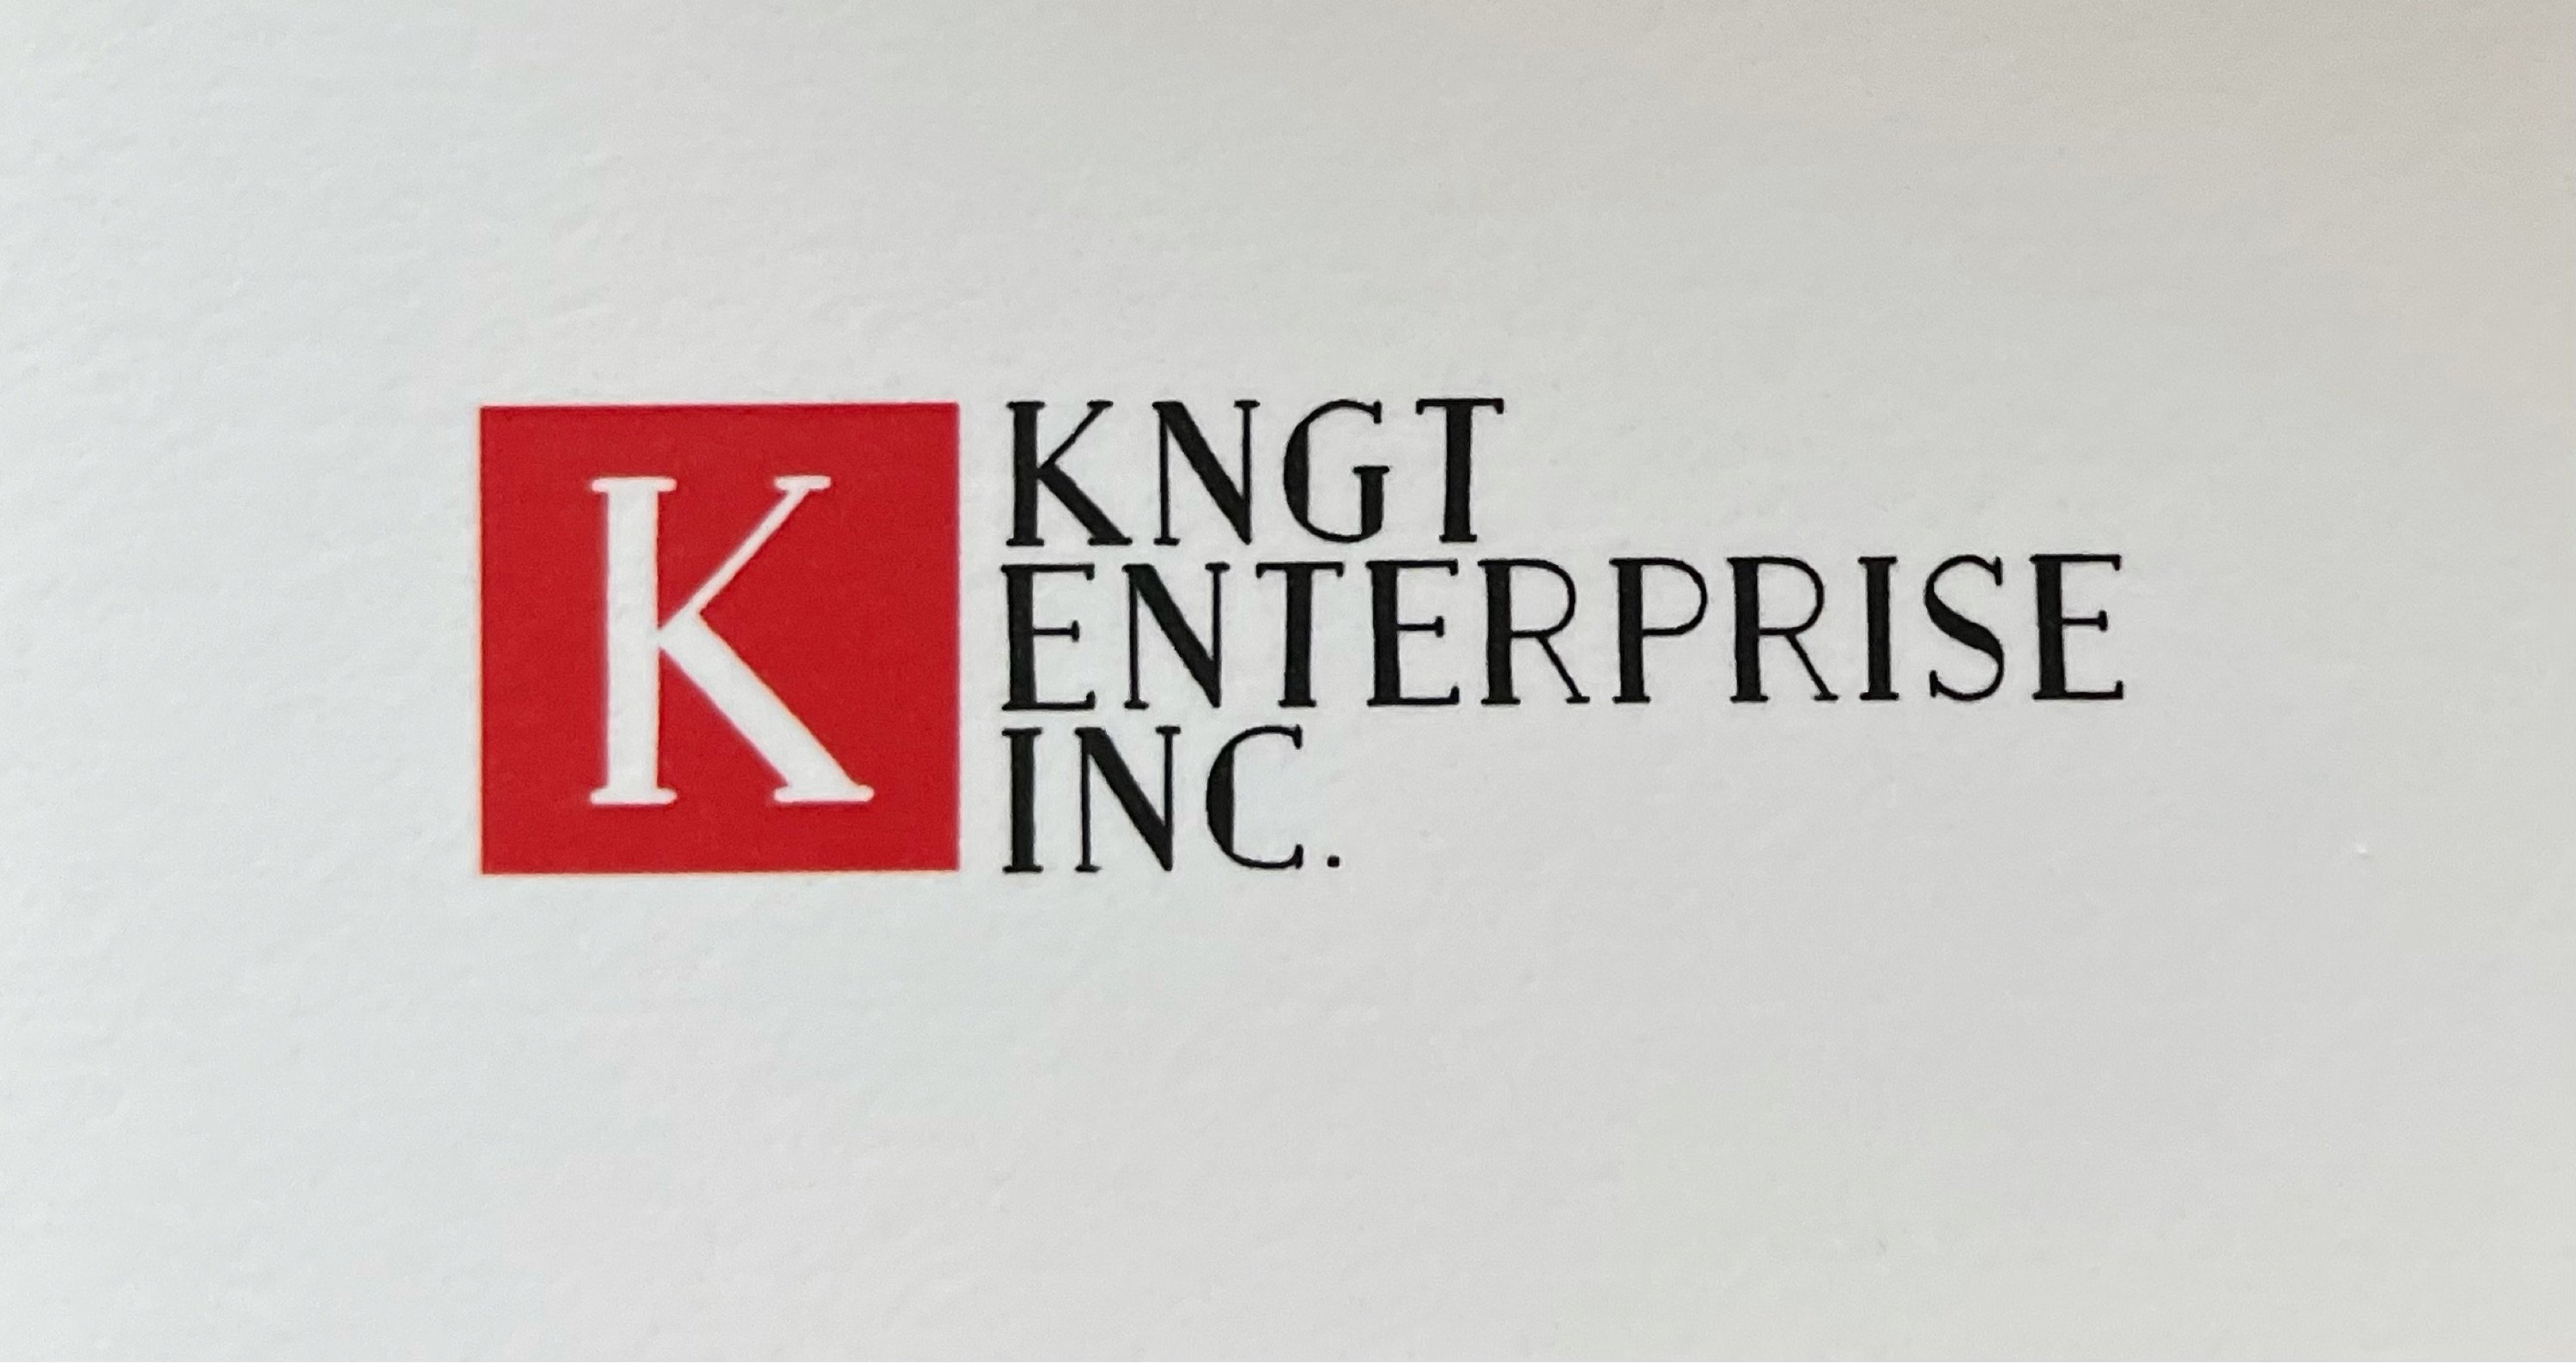 KNGT Enterprise, Inc. Logo